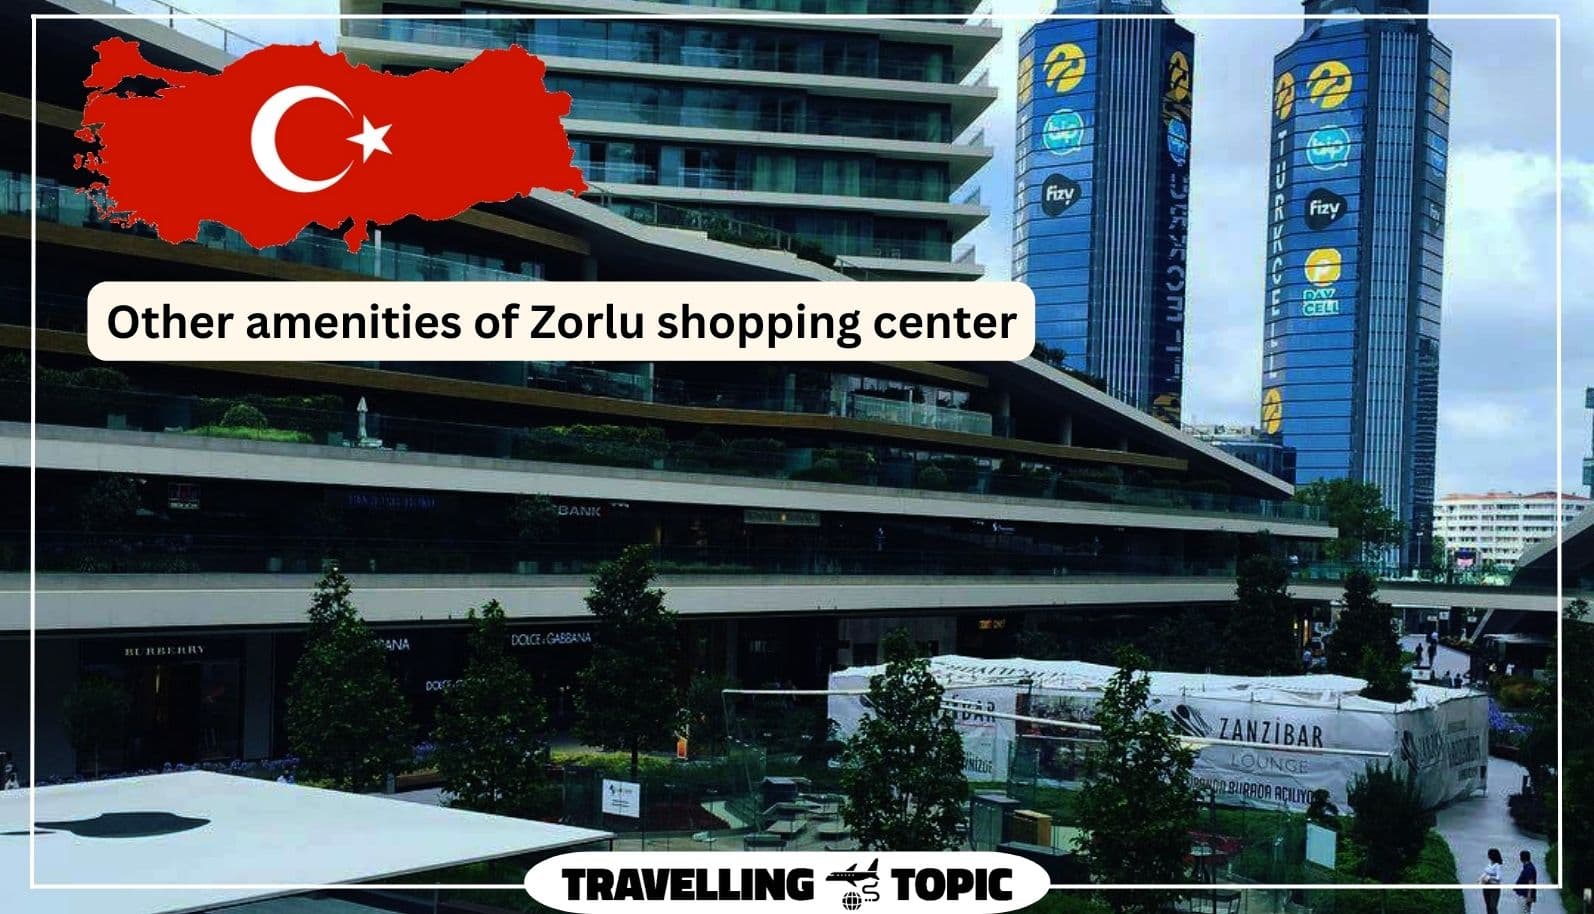 Other amenities of Zorlu shopping center